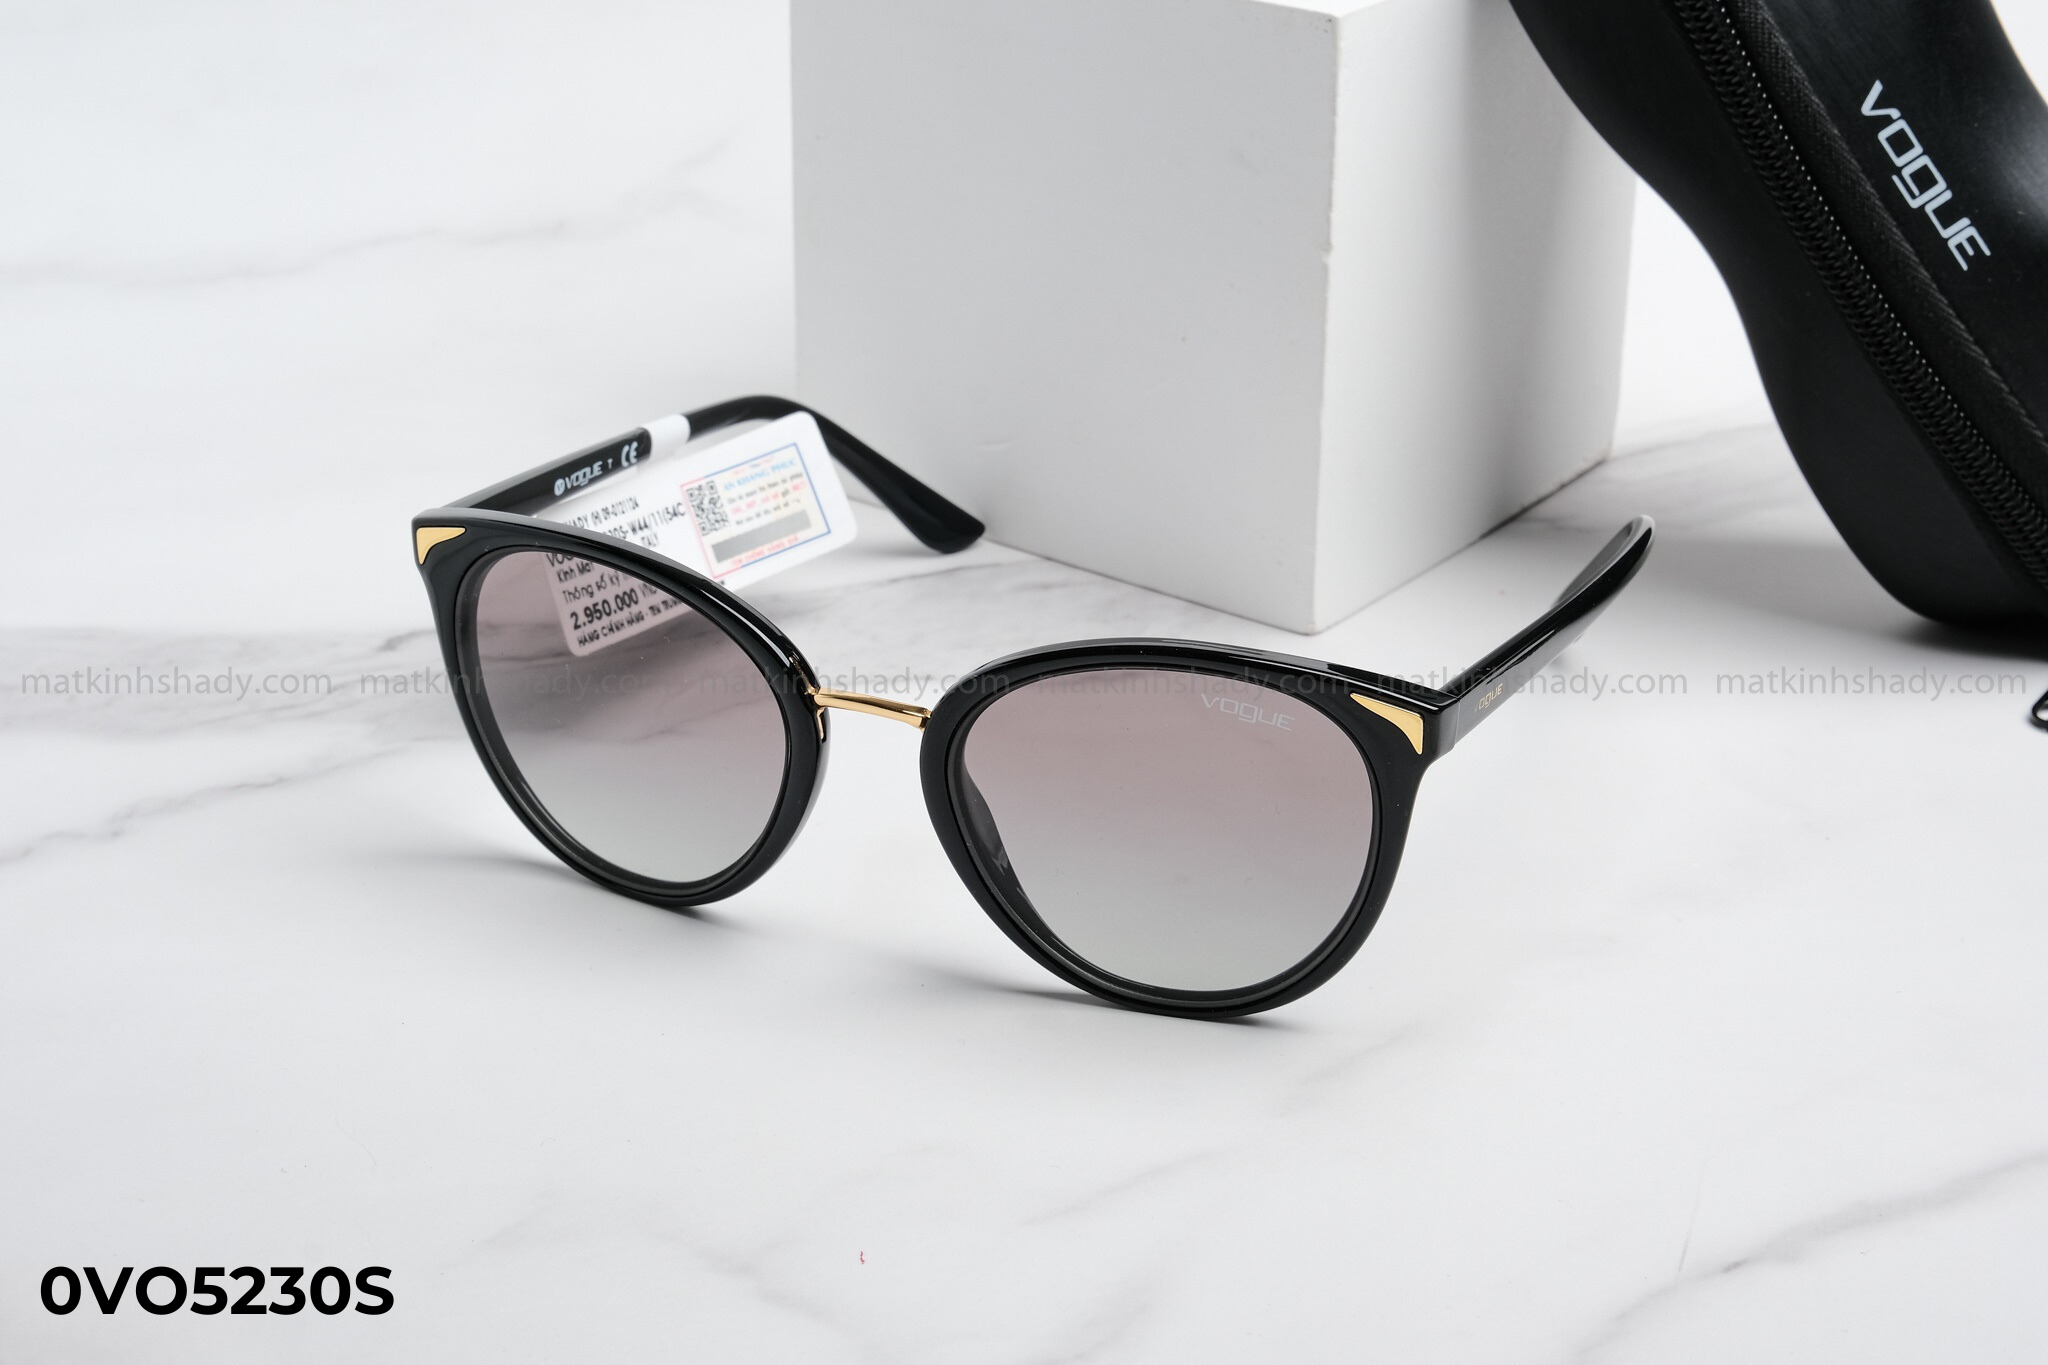  Vogue Eyewear - Sunglasses - 0VO5230S 